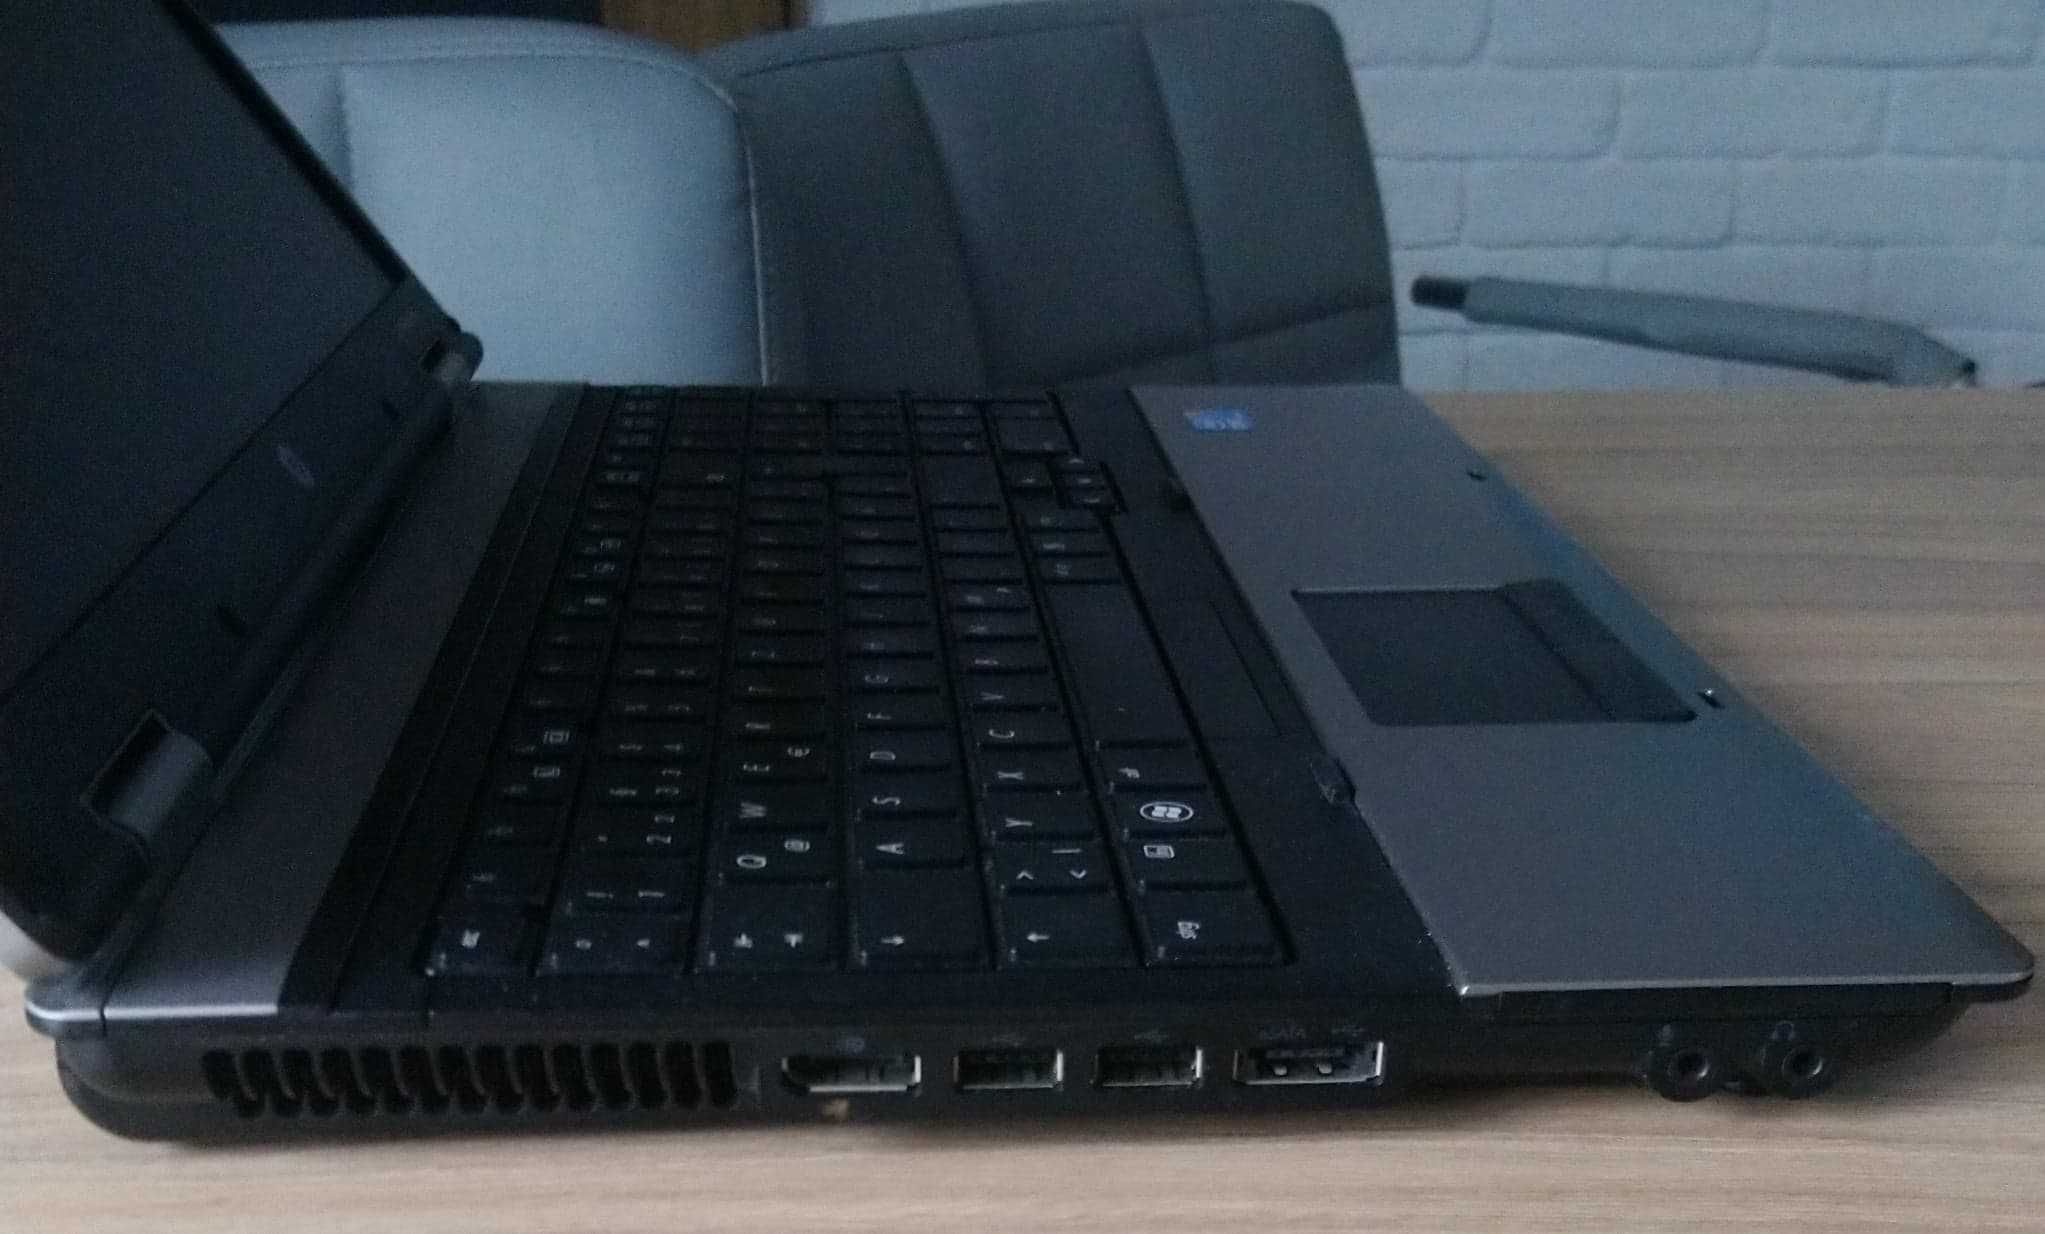 Laptop HP ProBook 6550b - sprawny kompletny